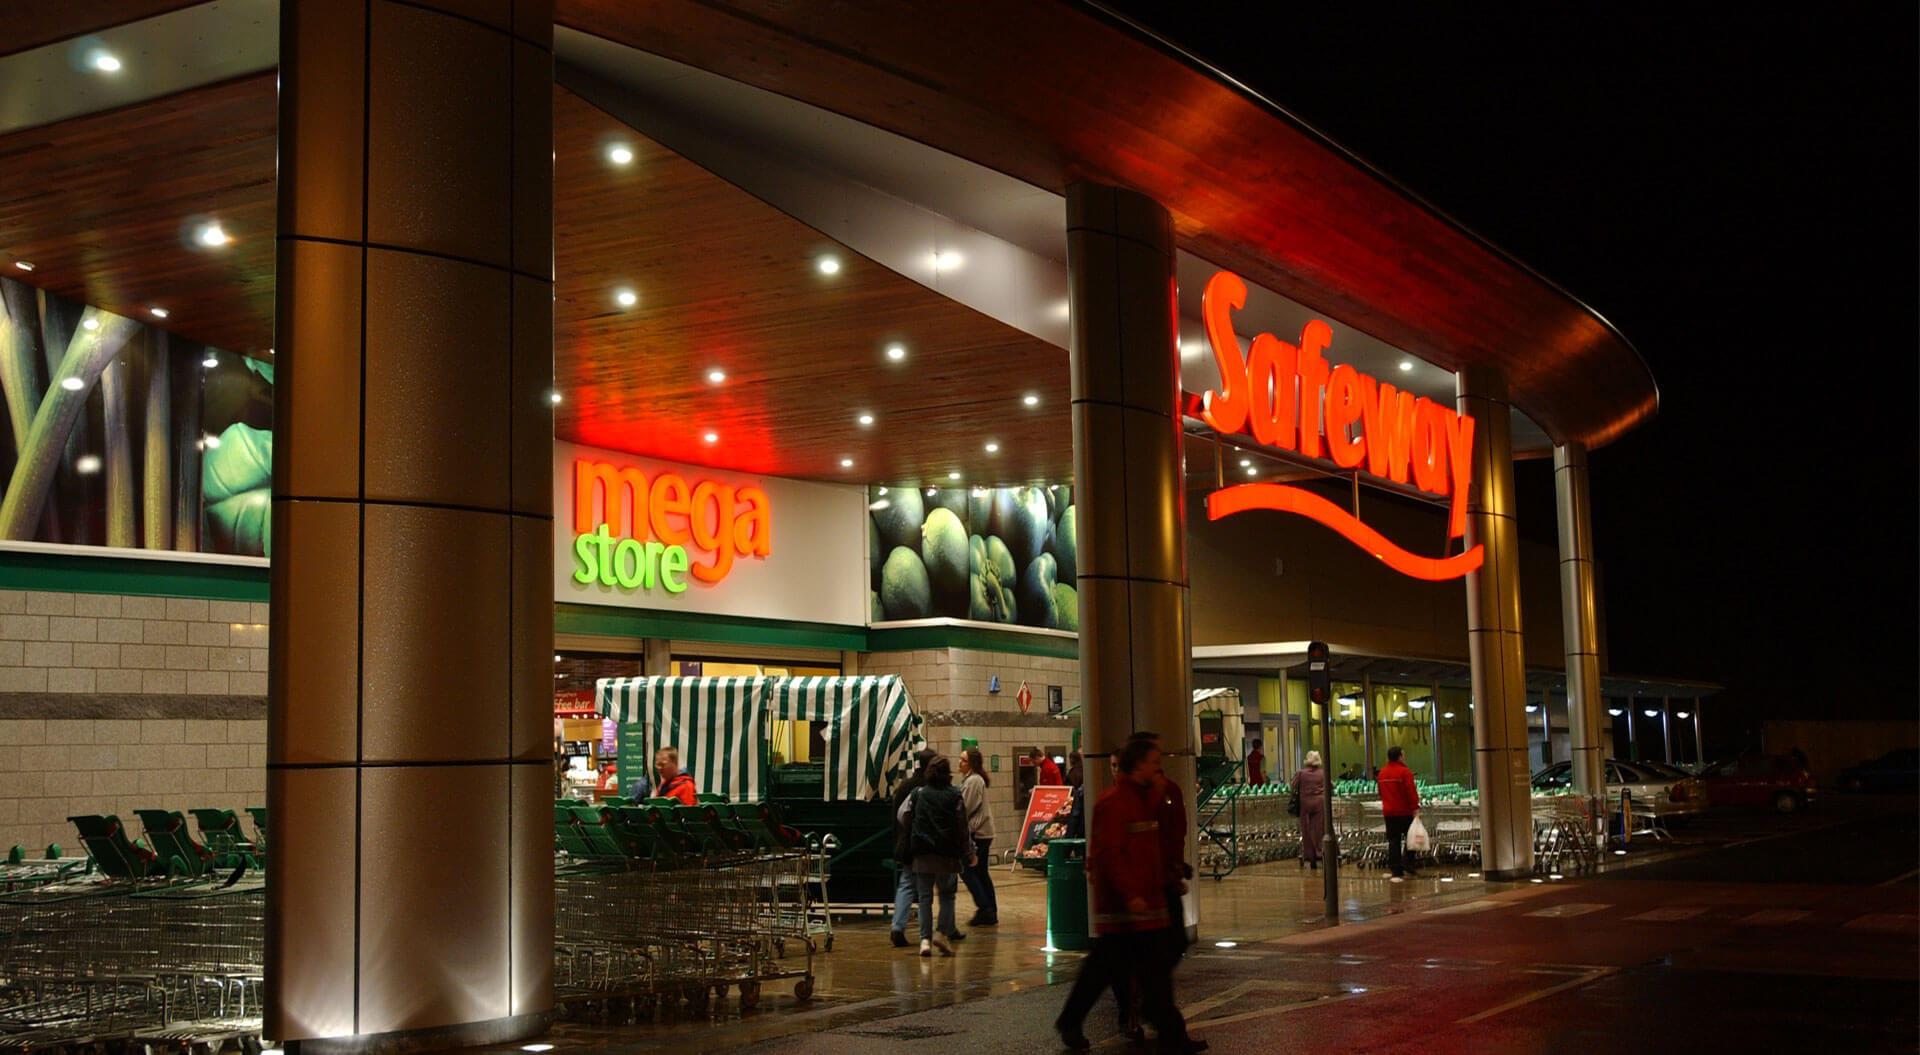 Entrance to Safeway Mega store hypermarket design and external branding